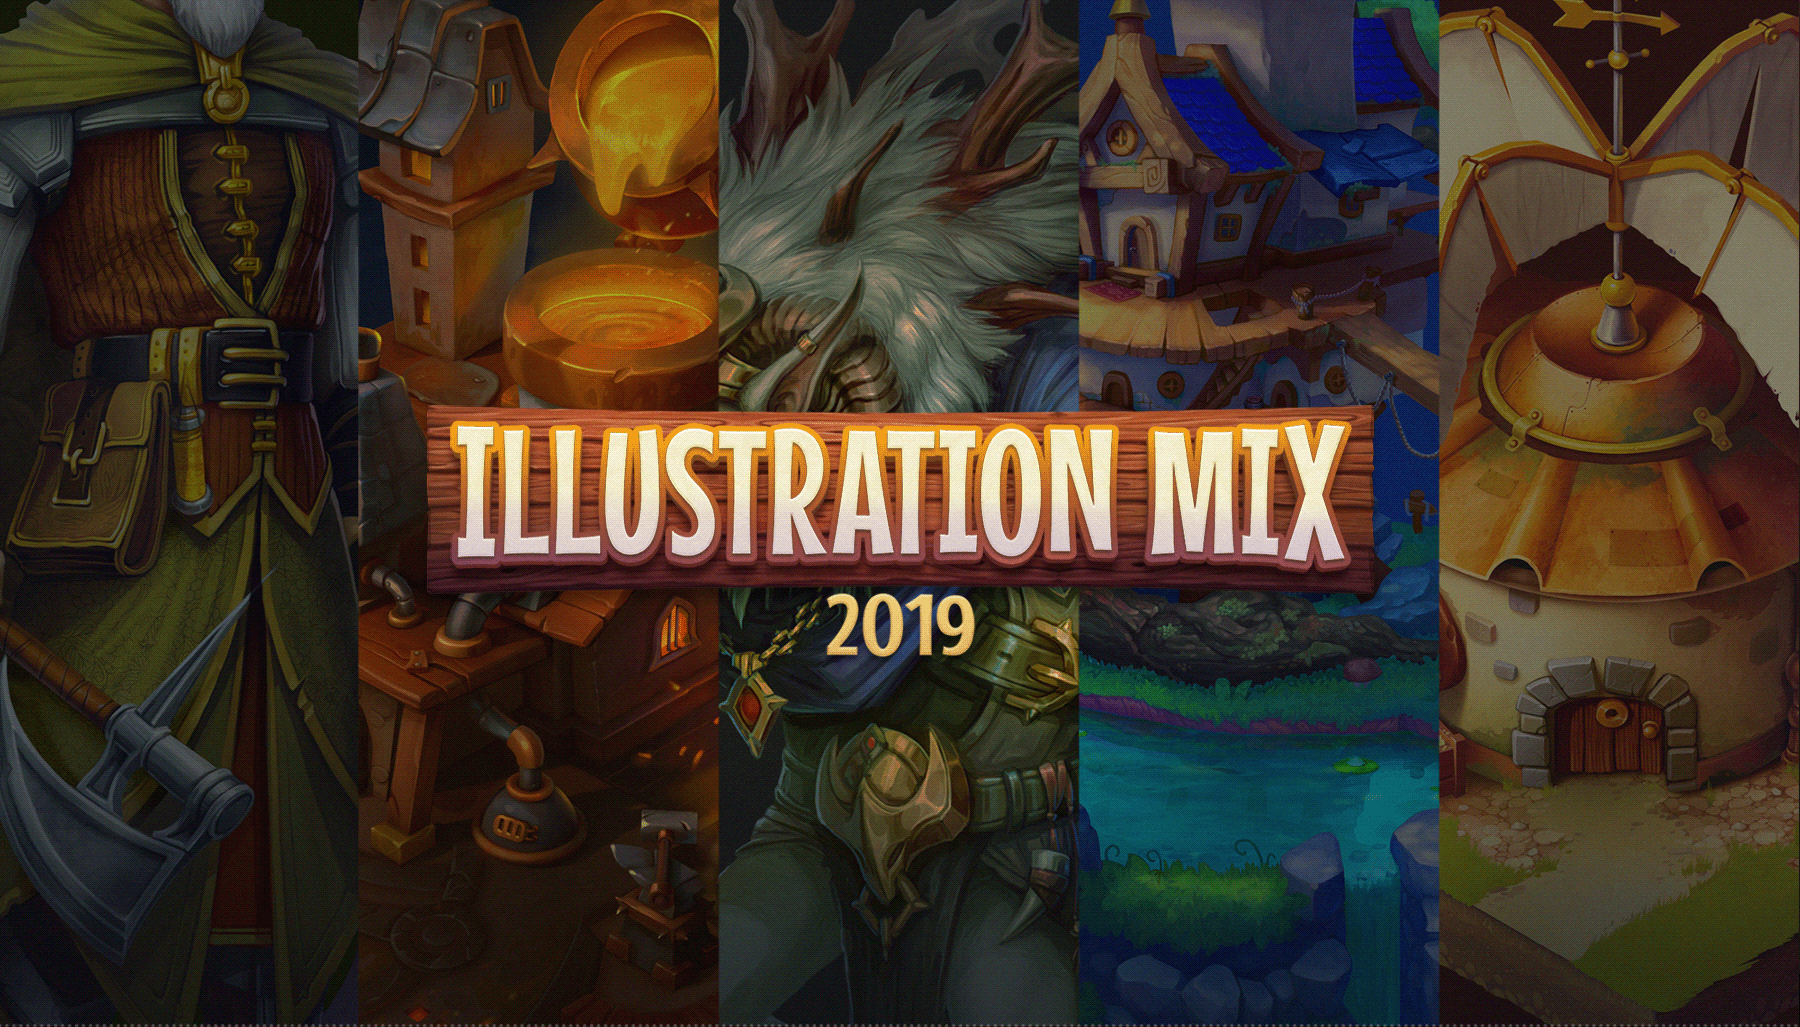 Illustration mix | 2019 on Behance8b9fd892640309.5e50060857596.png